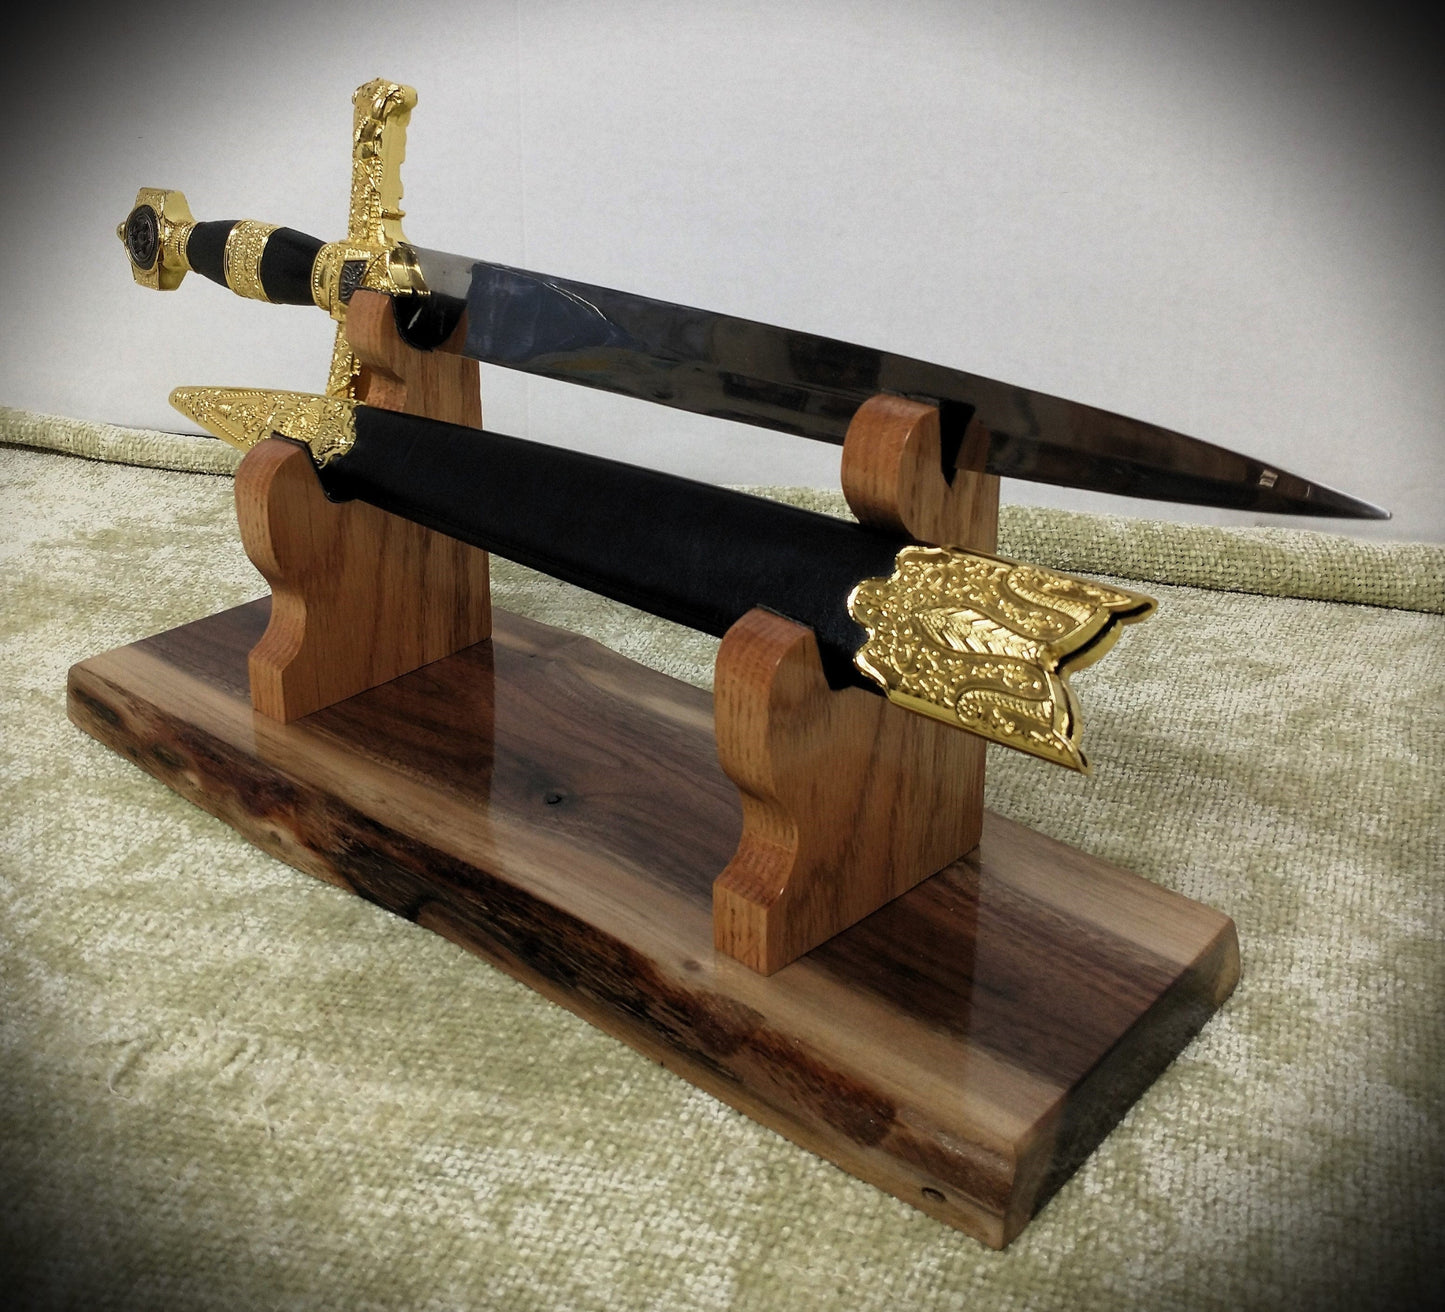 walkerwoodgifts sword stands Rustic Live Edge Walnut K-bar, Small Katana, Dagger, Sheath with Blade/Handle Display Stand Collectors Gift